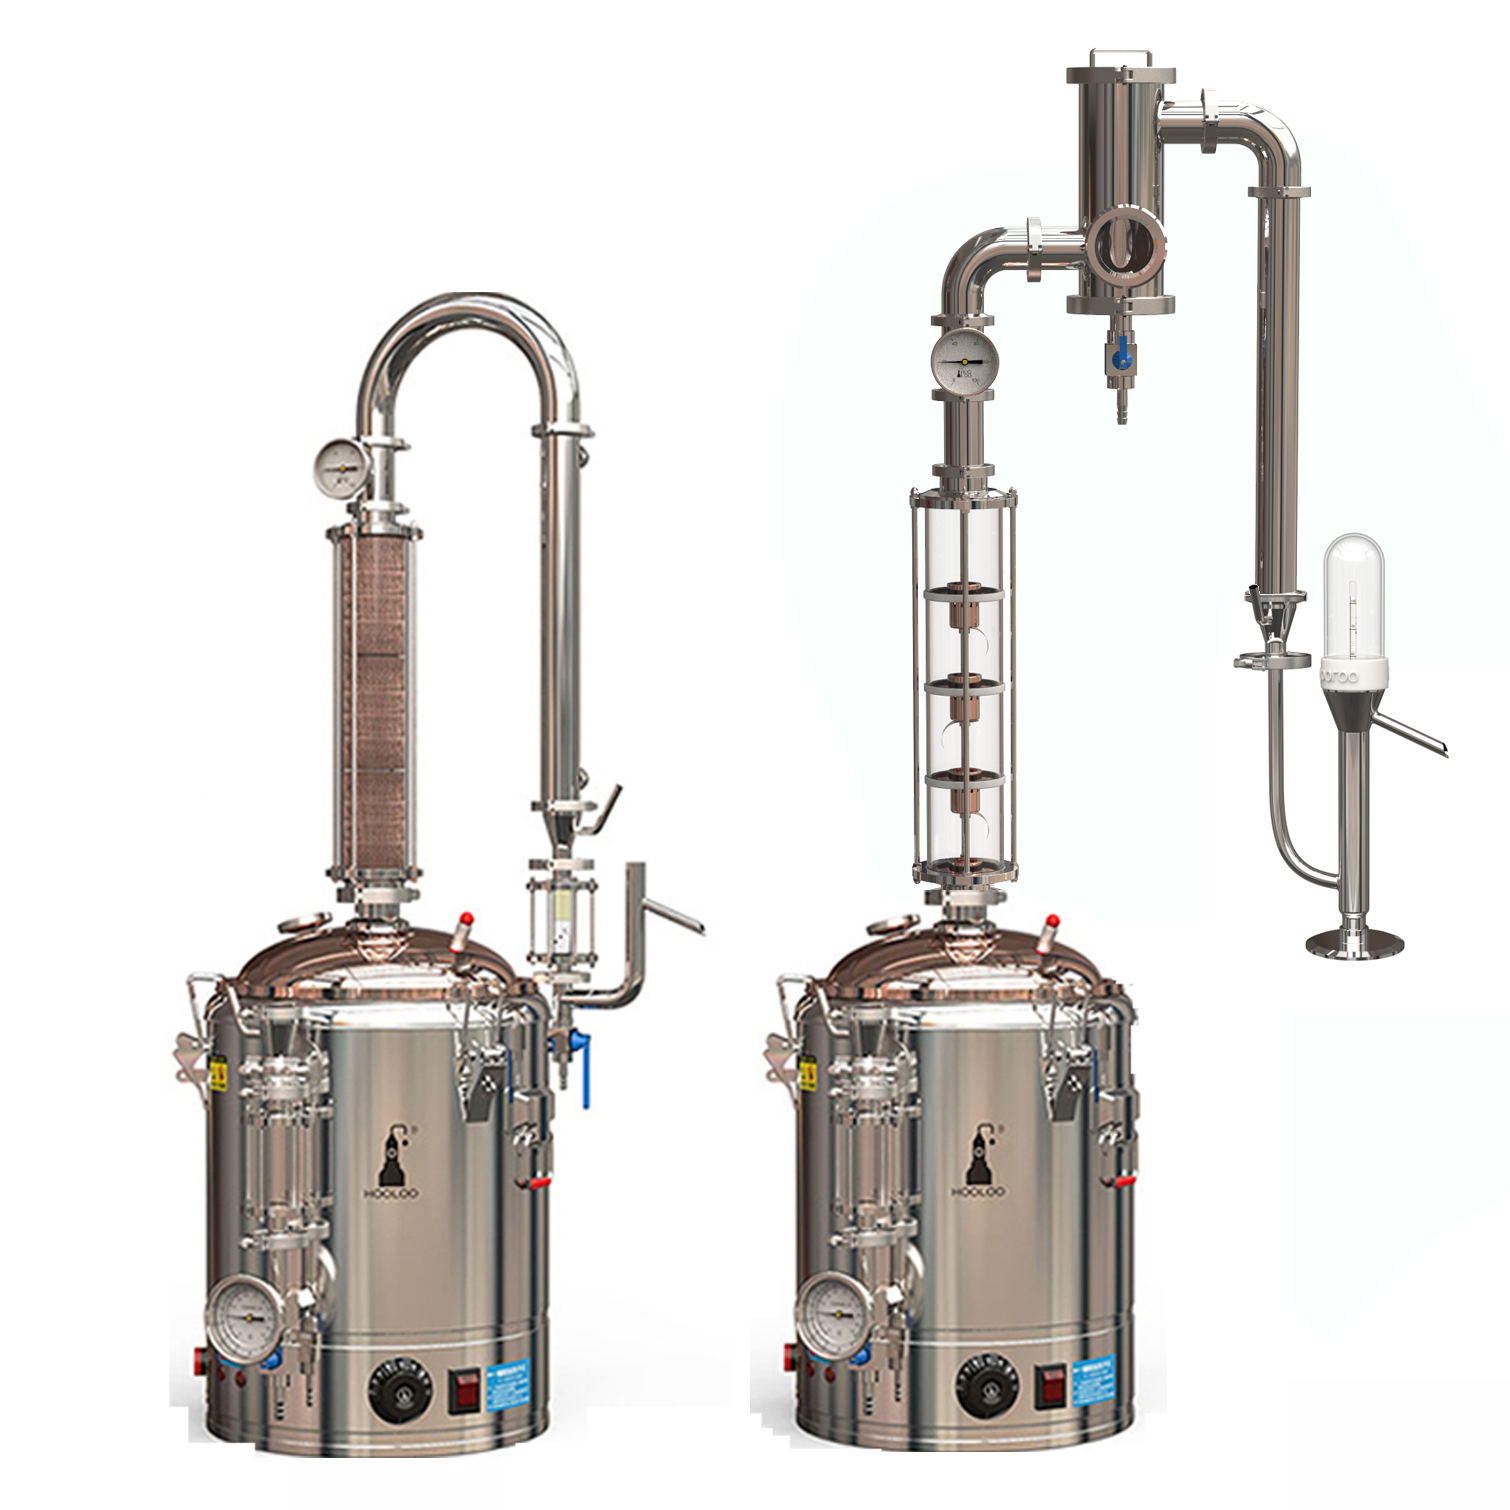 DW25+ Gin basket +Distillation column kit + Hooloo parrot beak + 21L fermentation tank (dedicated link) - Hooloo Distilling Equipment Supply